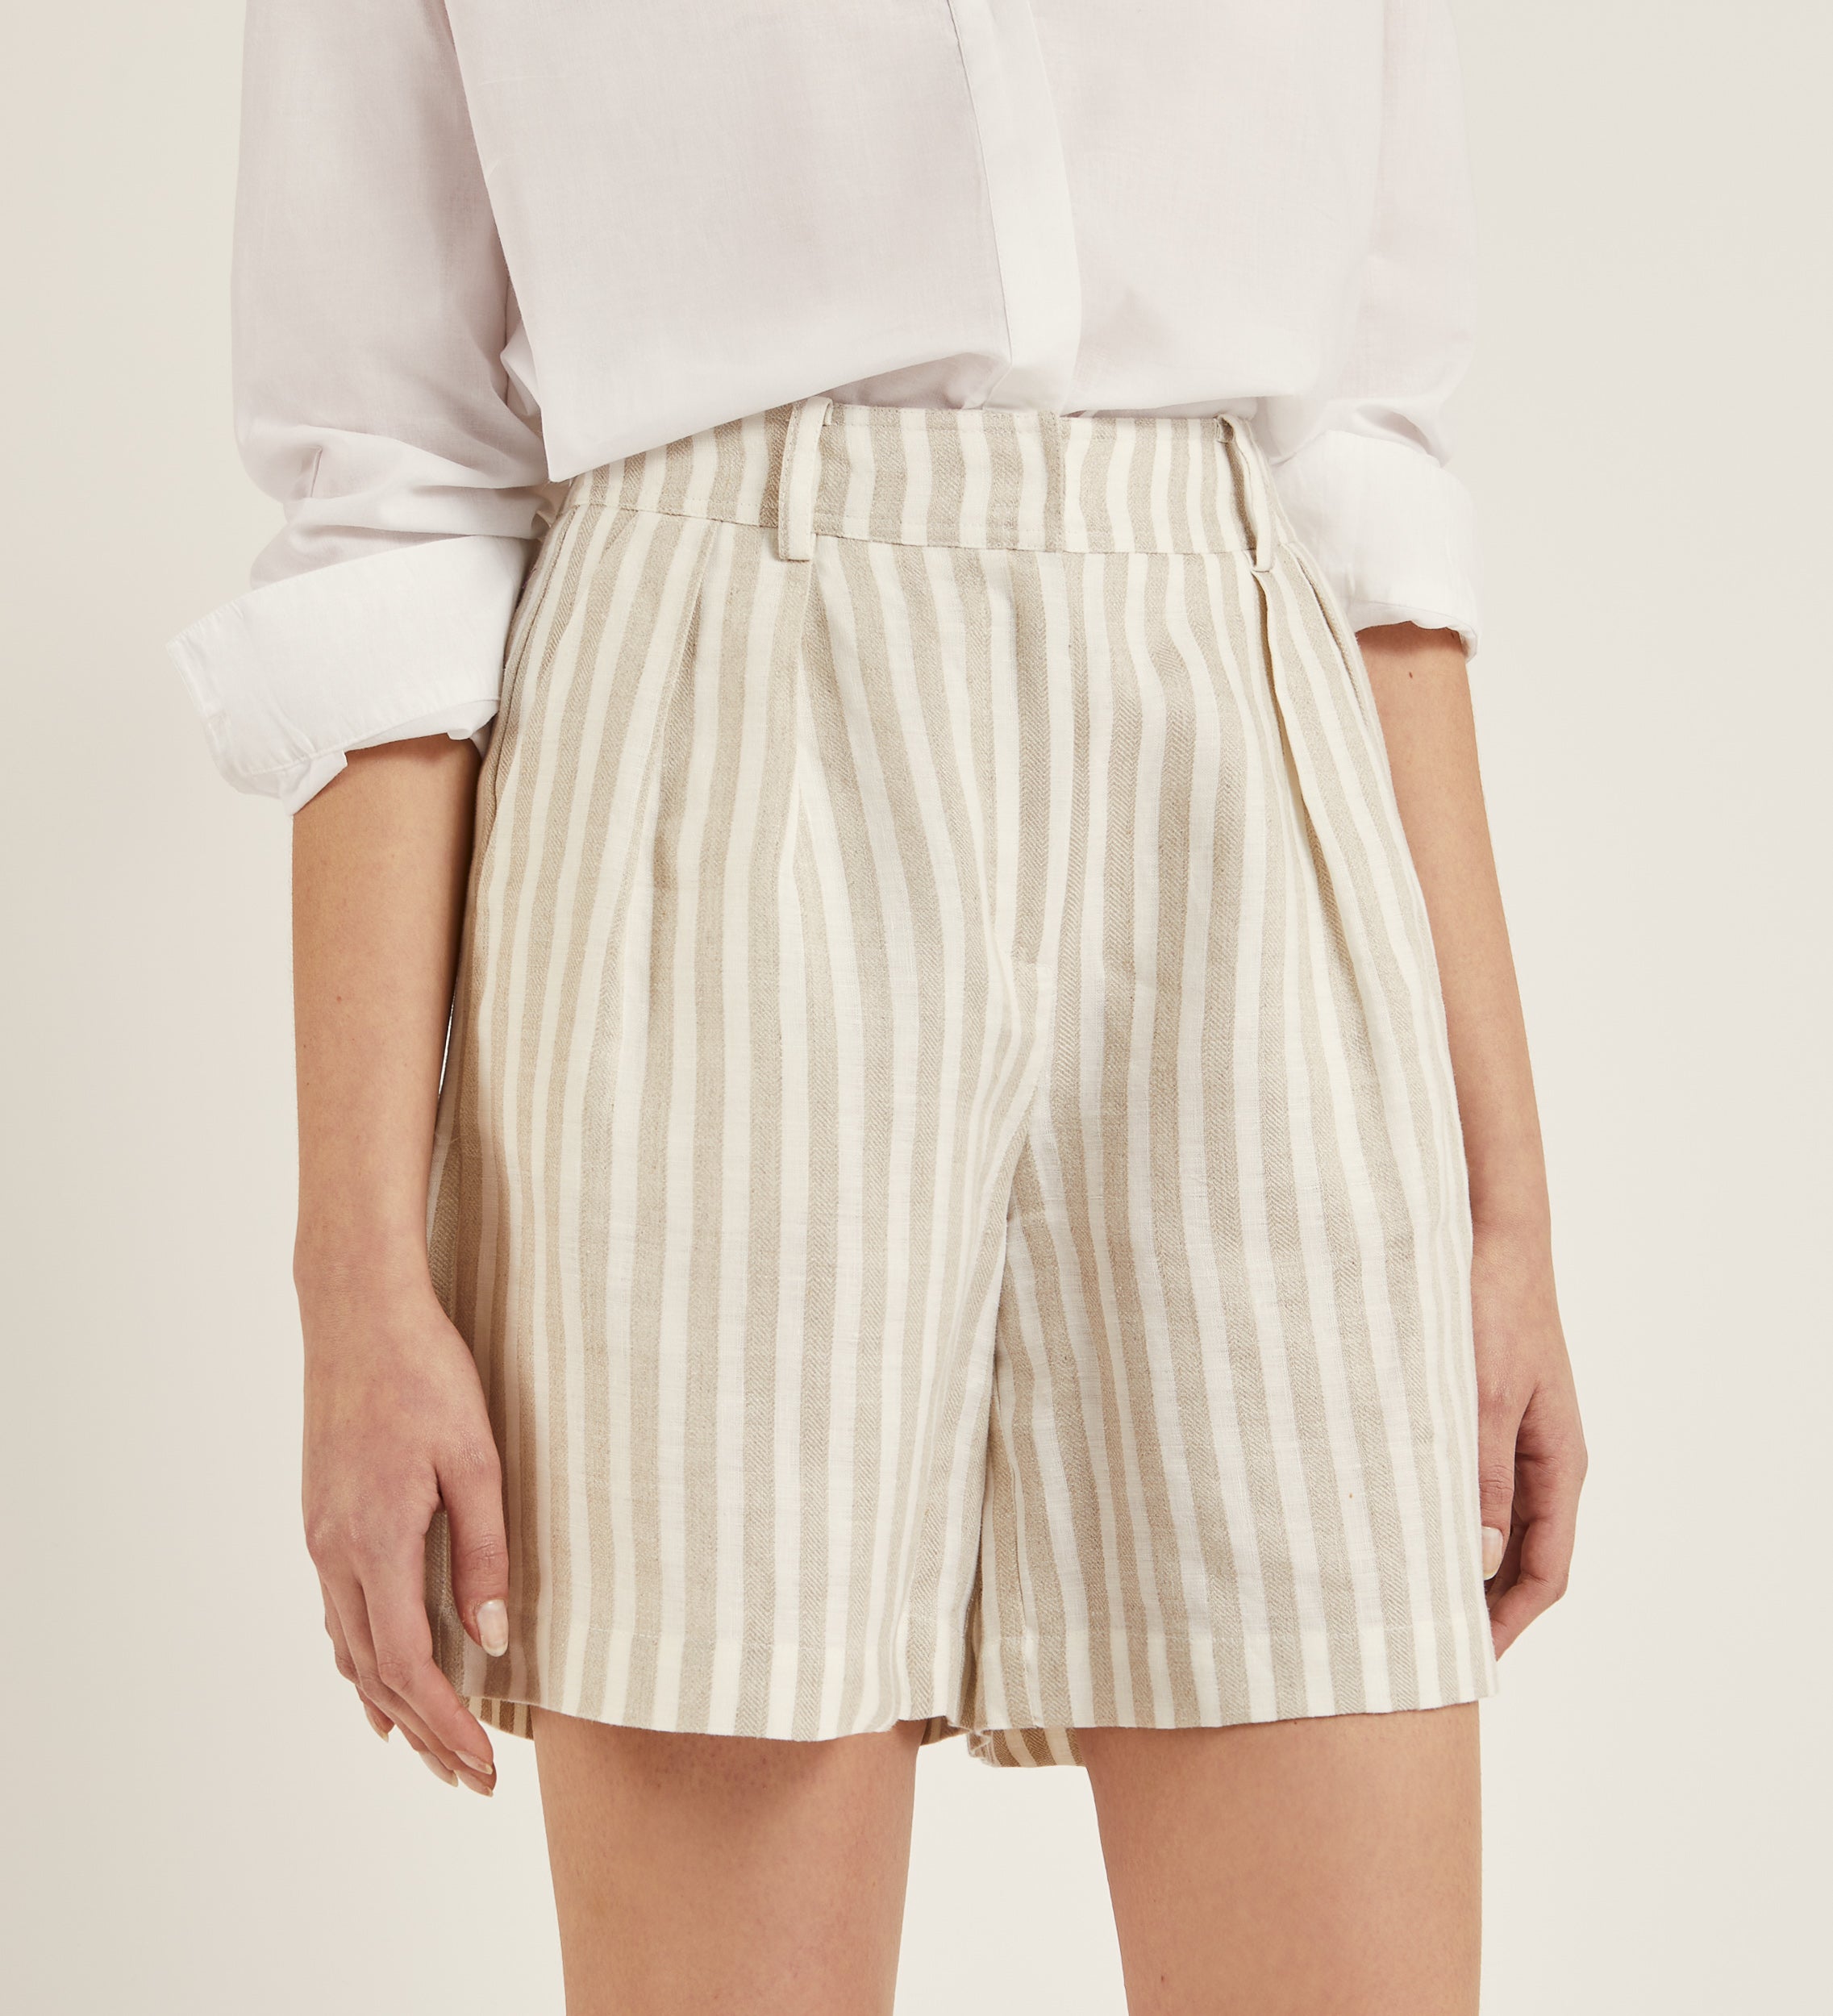 Striped linen shorts